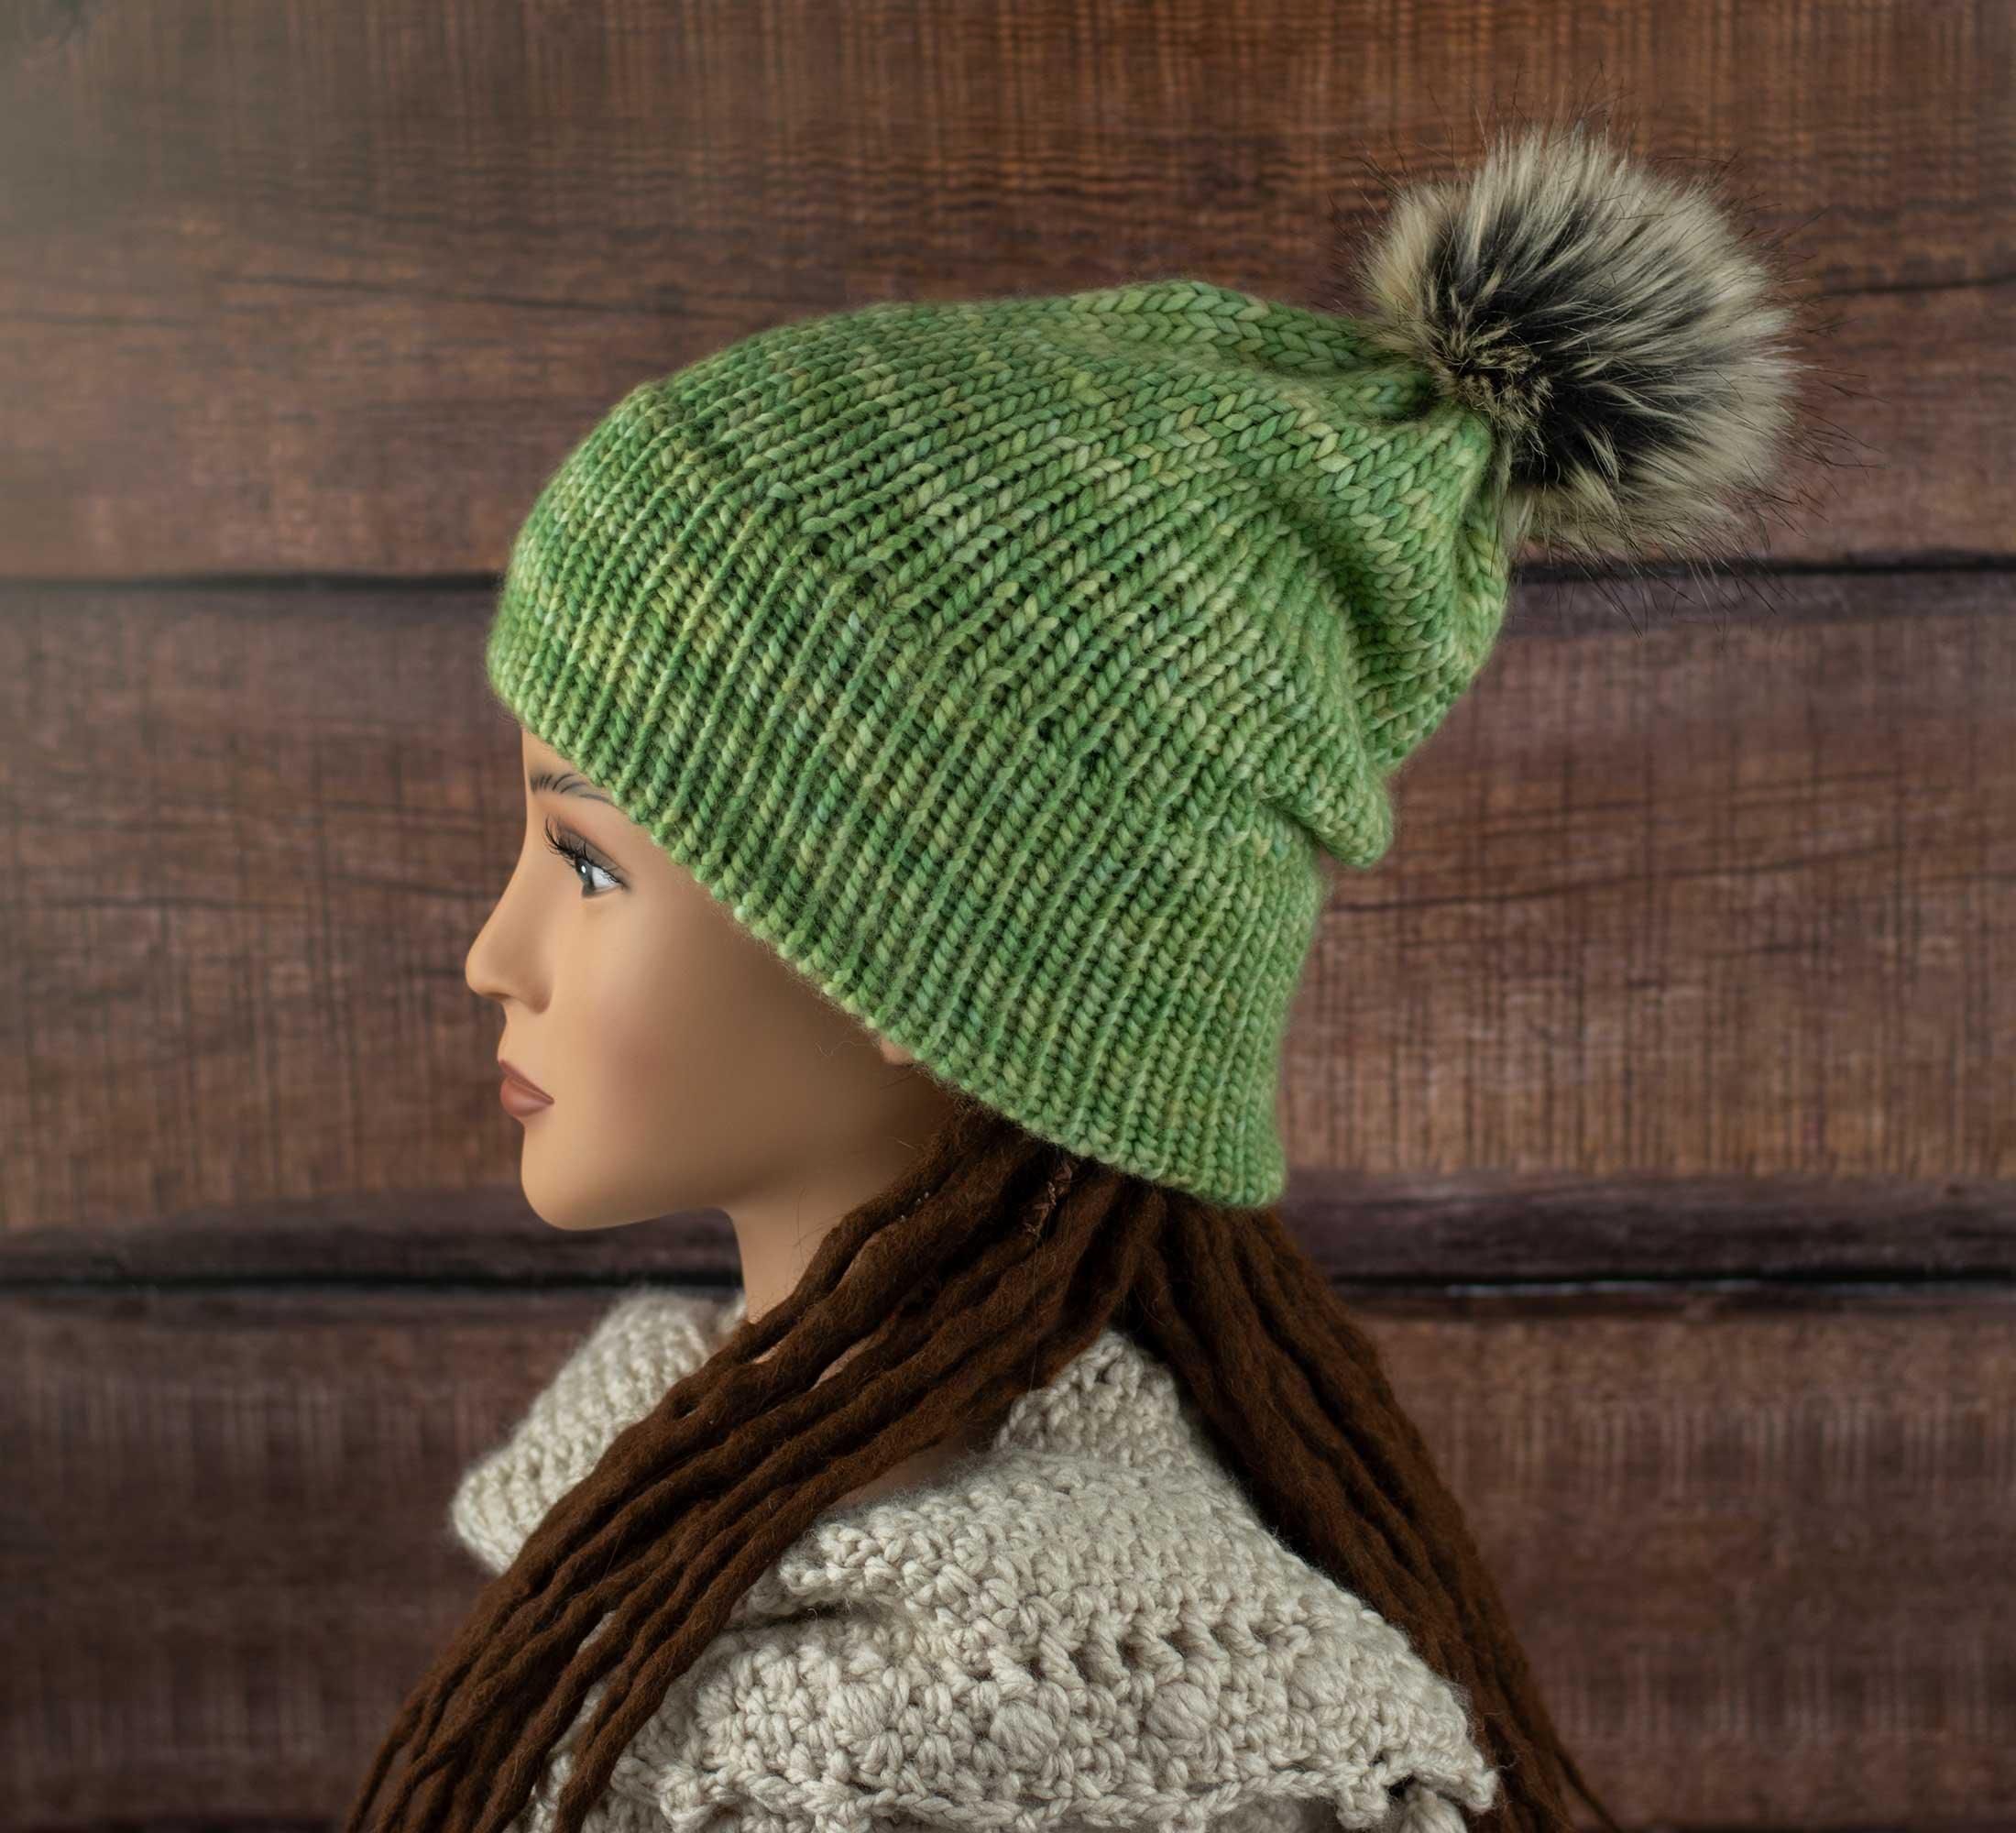 Winter hat for dreadlocks "Woodland"